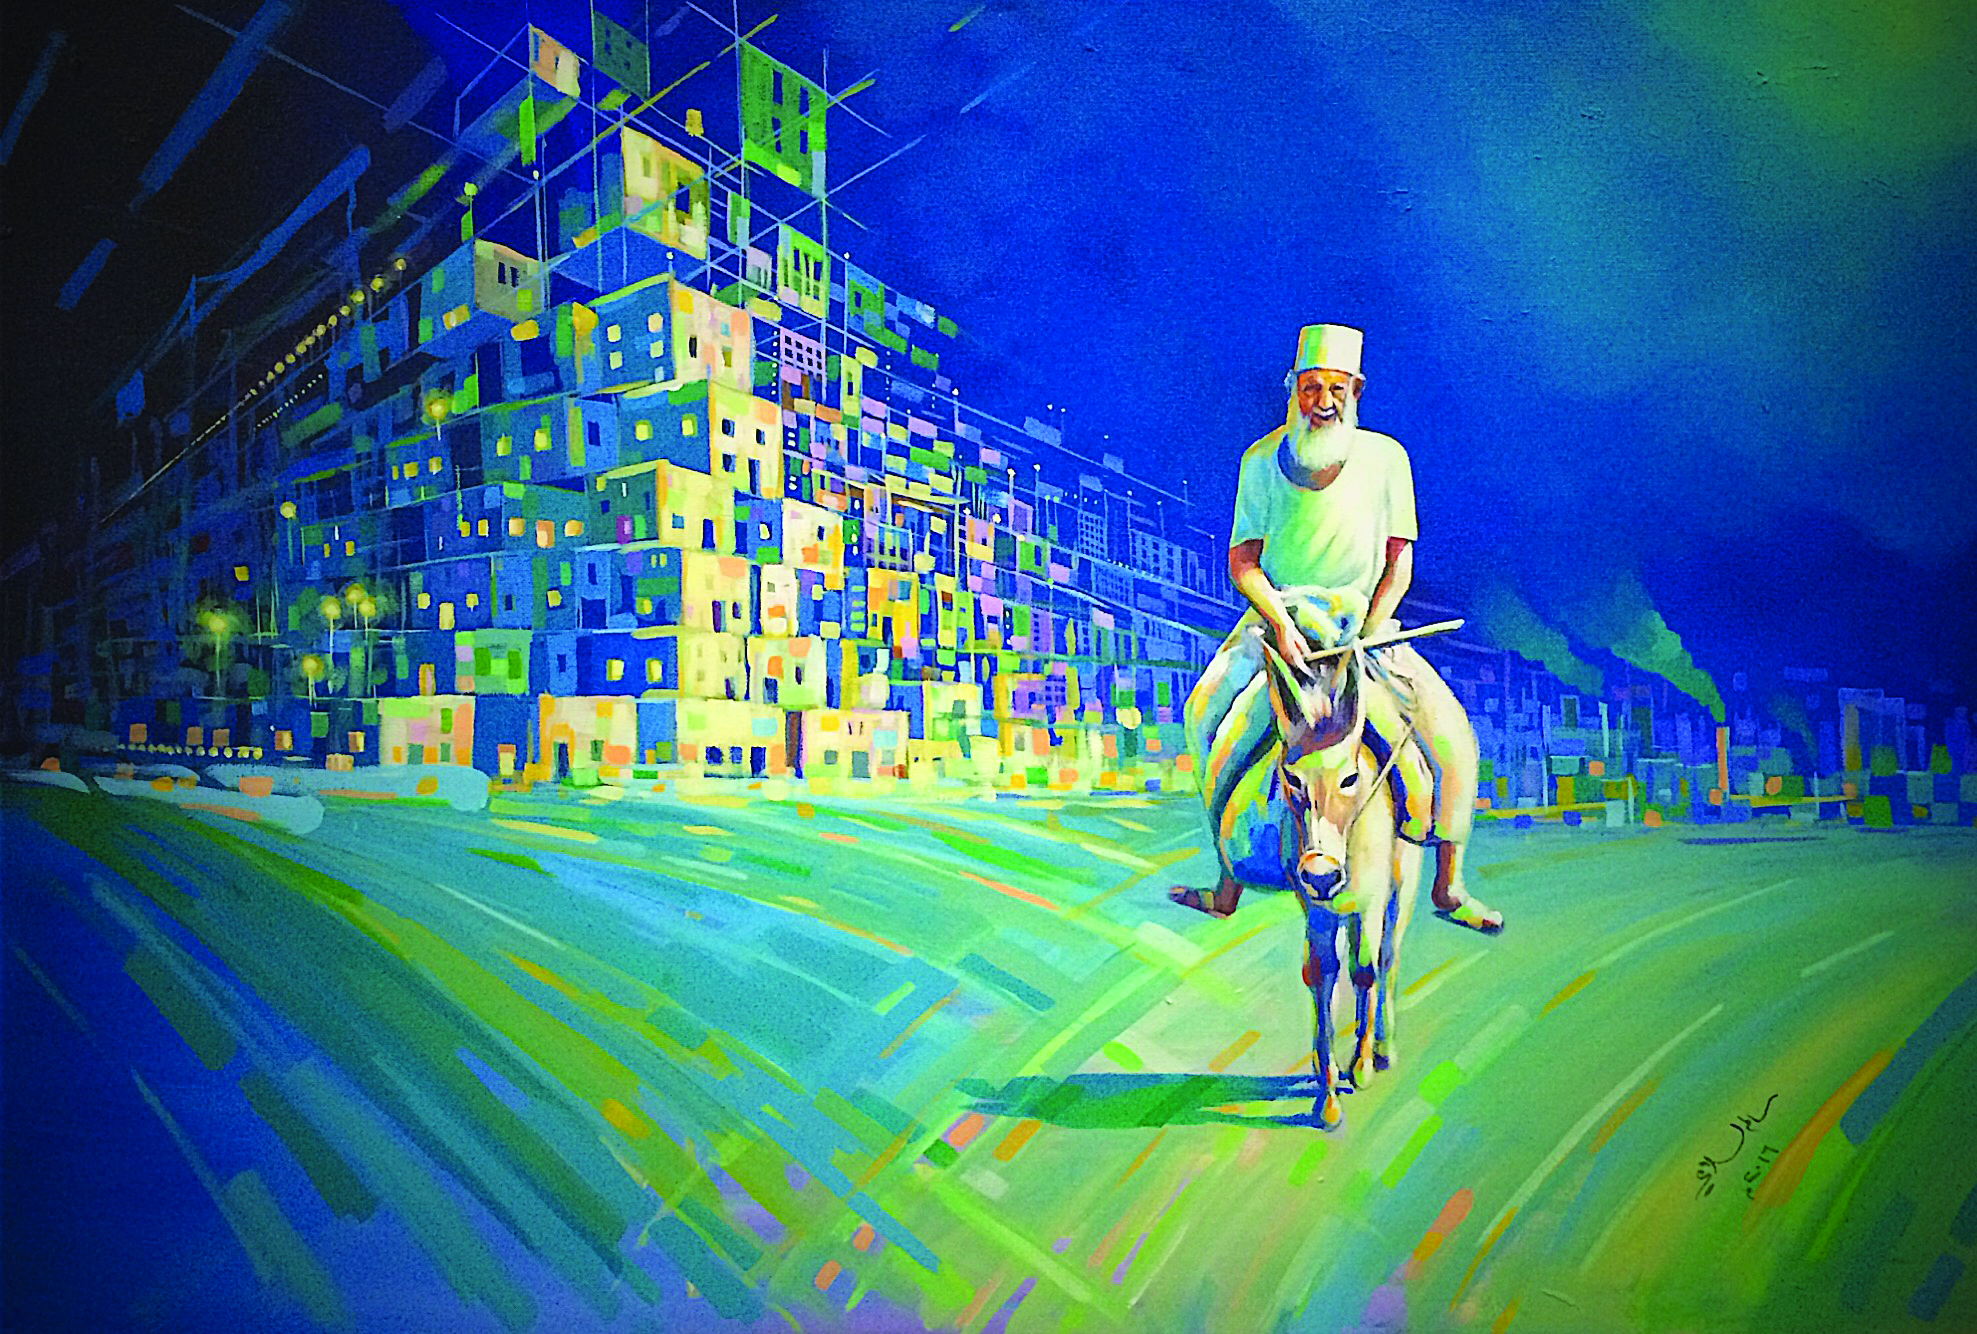 OmanPride: Artist honours heroic deed of policeman with painting